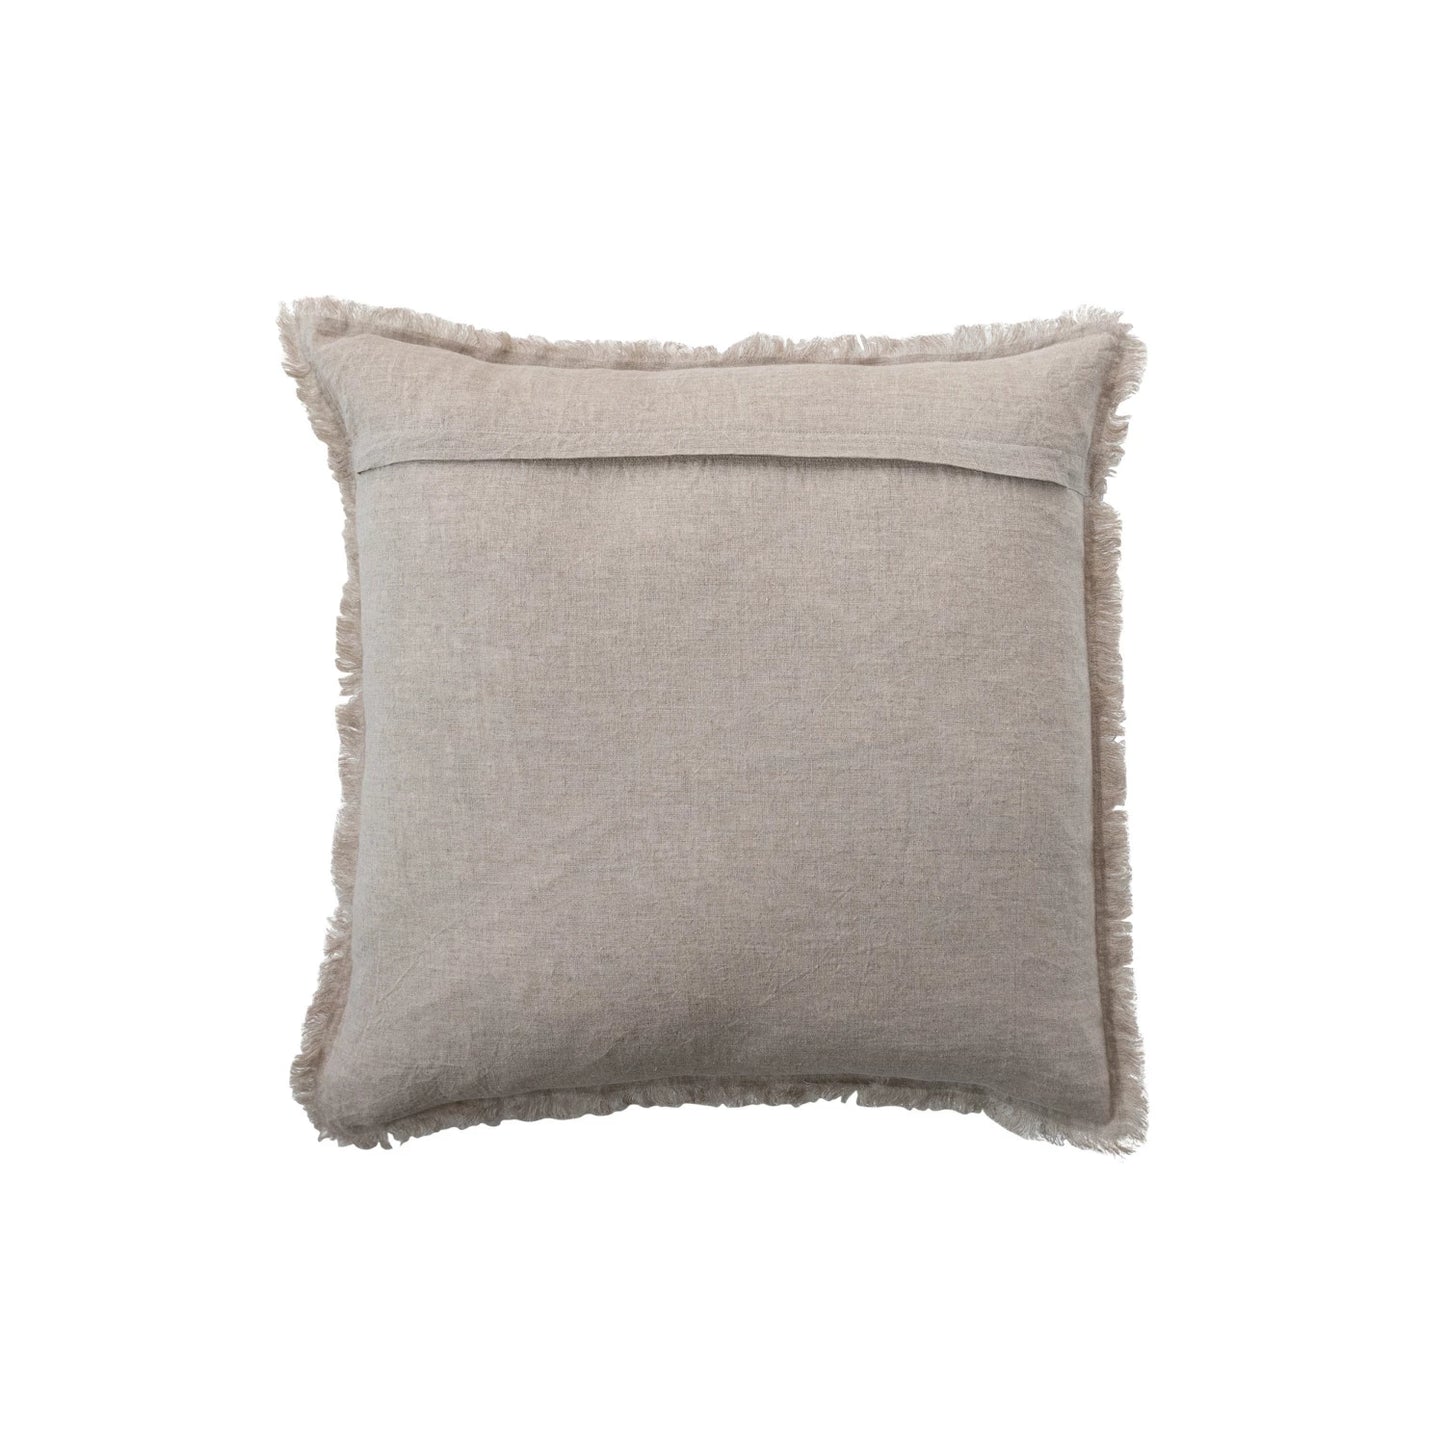 Stonewashed Linen Throw Pillow, Natural (multiple sizes)